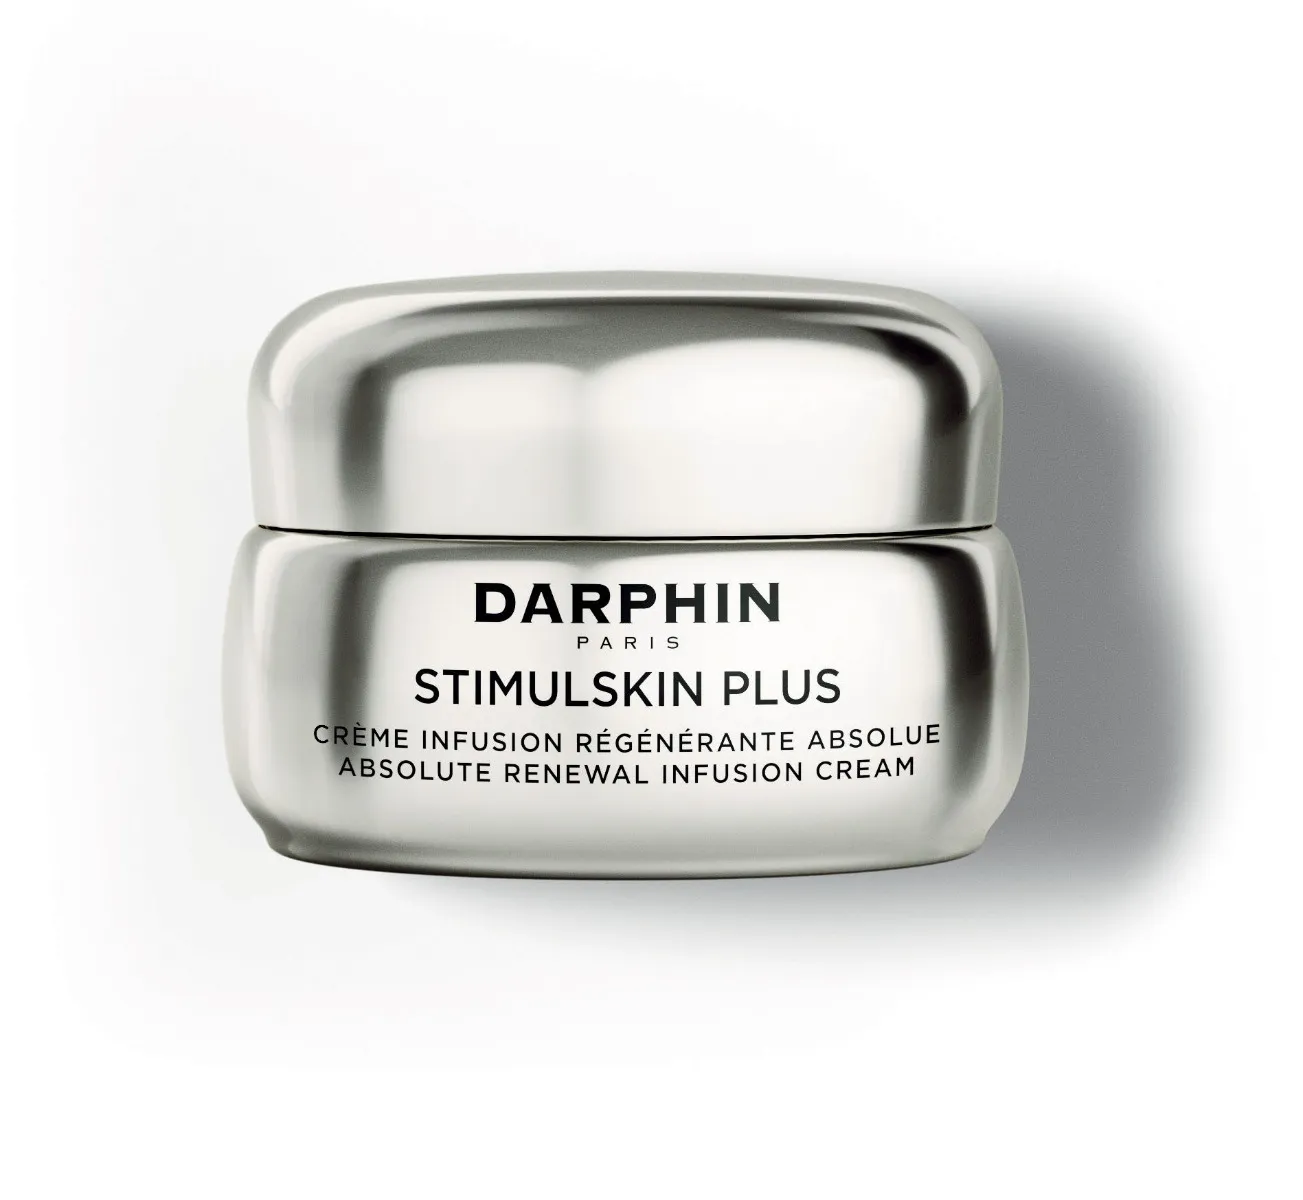 Darphin Stimulskin Plus Creme Infusion Regenerante Absolue